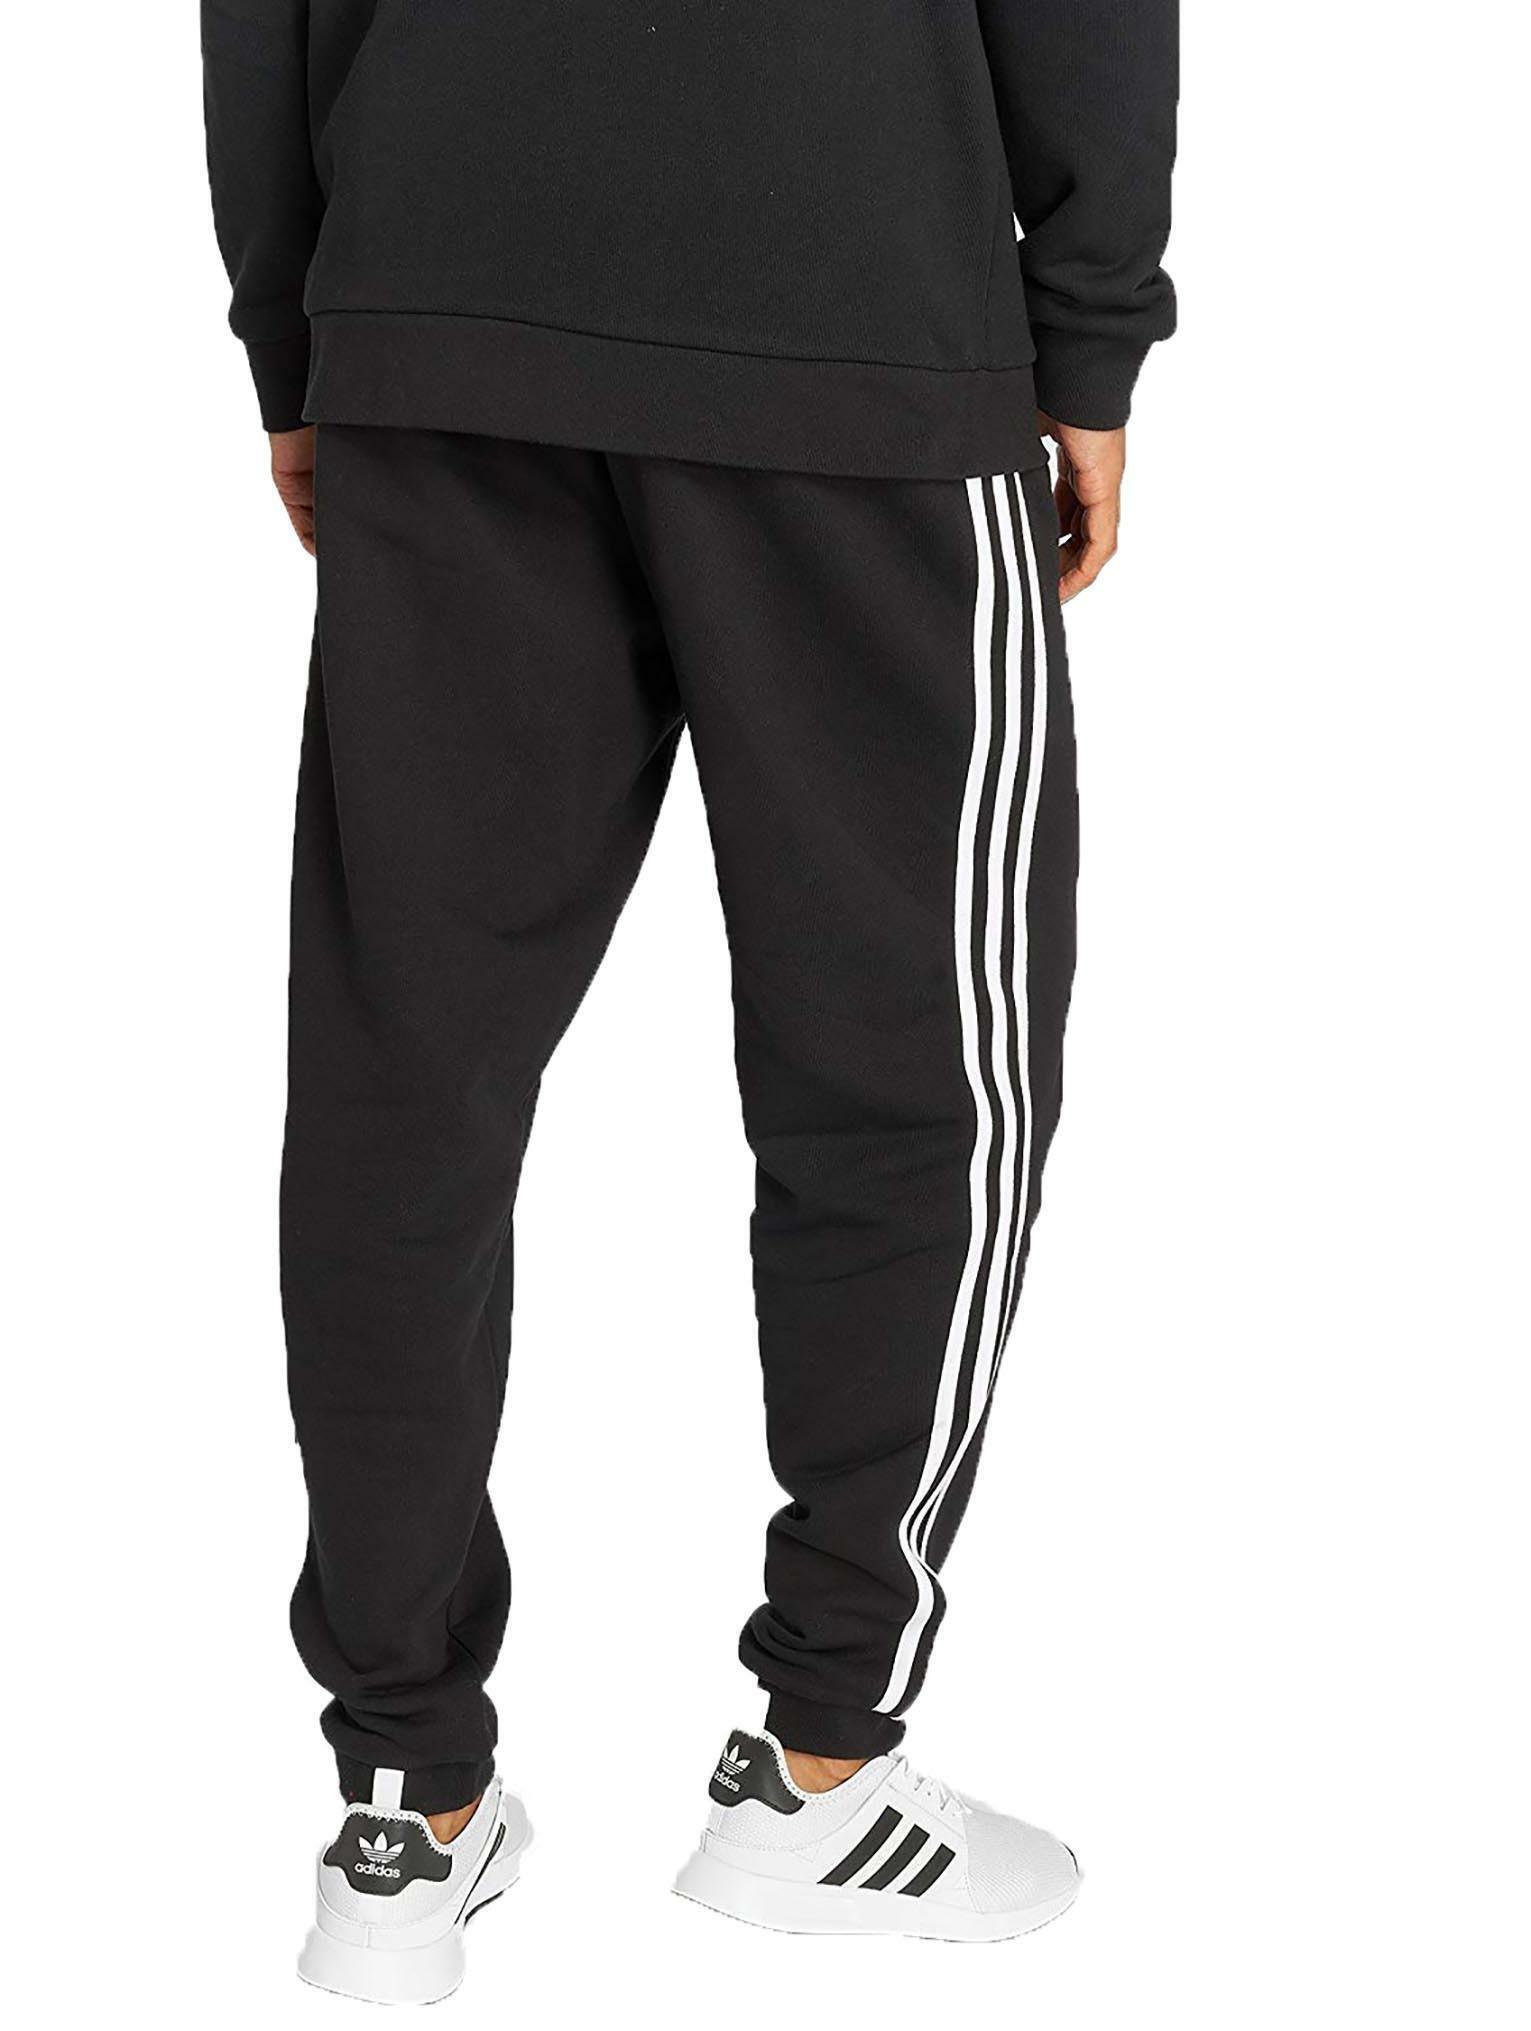 Adidas 3 stripes pantaloni cotone garzato uomo nero dh5801